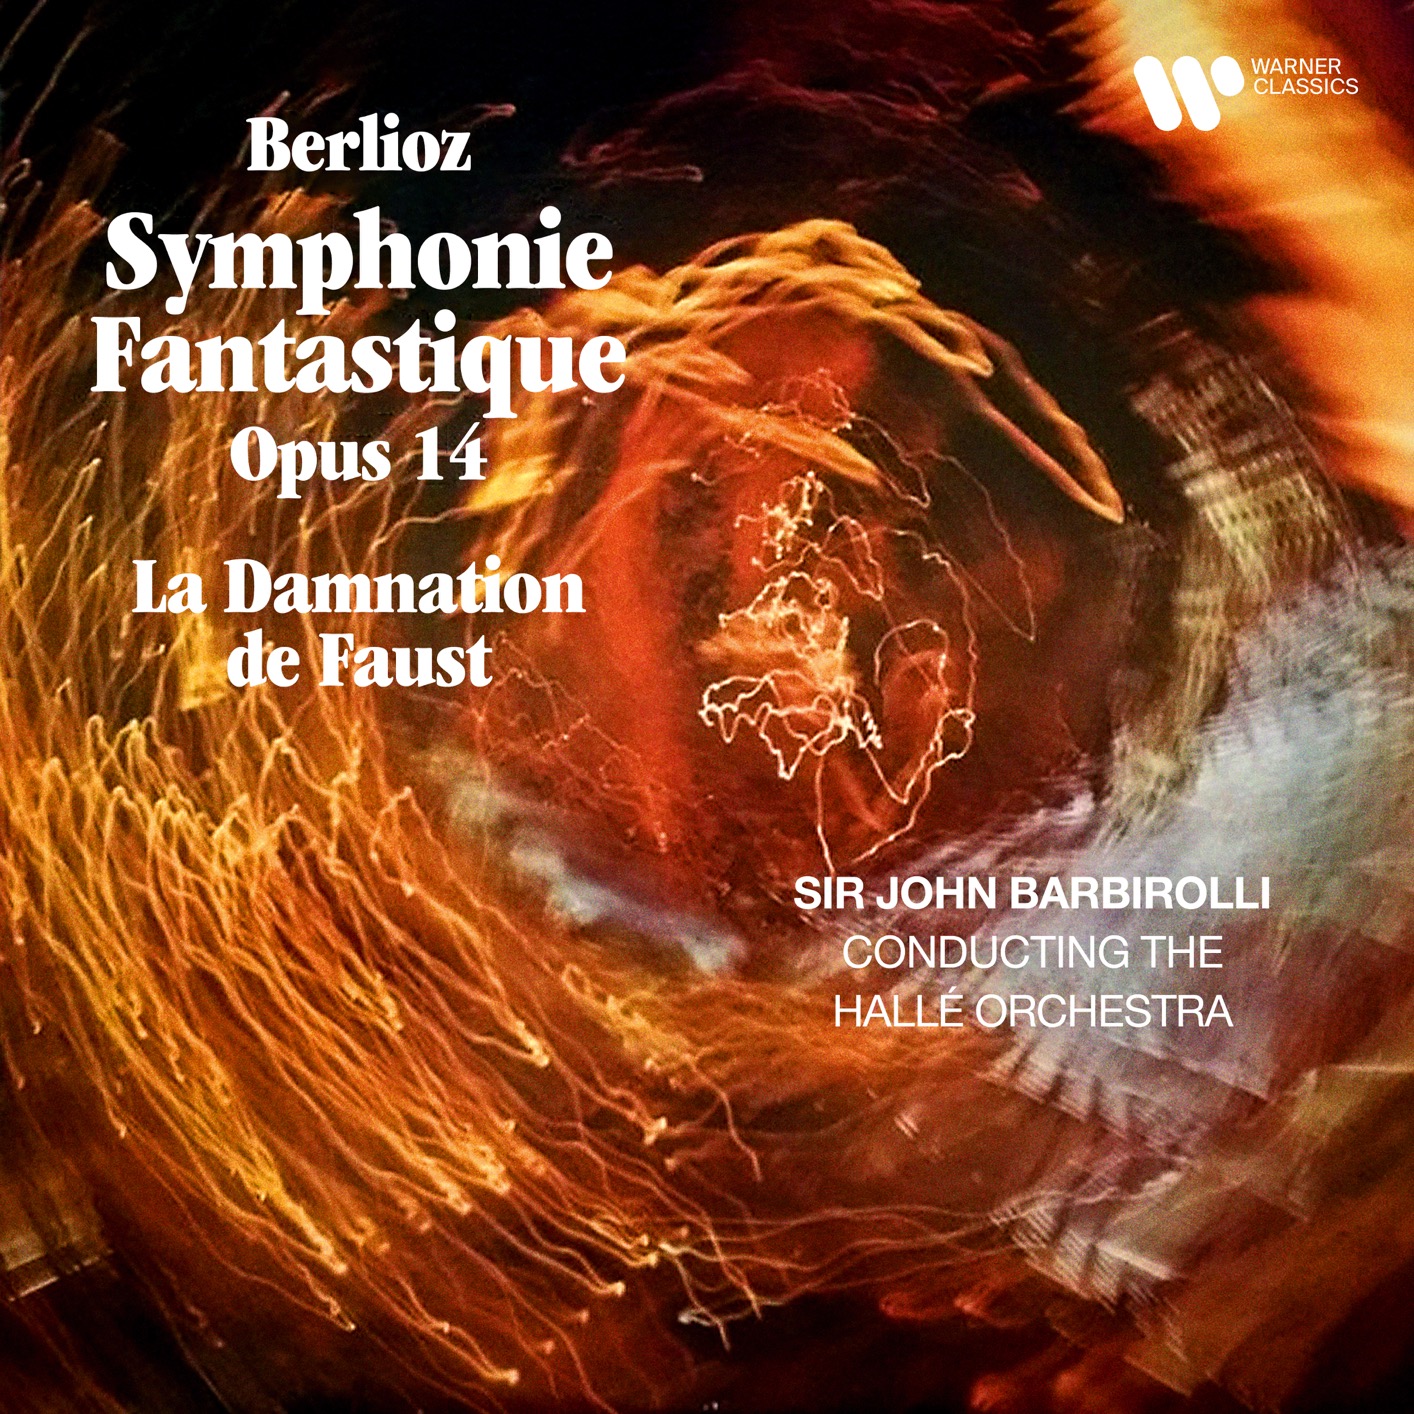 Halle Orchestra & Sir John Barbirolli – Berlioz – Symphonie fantastique, Op. 14 (1964/2020) [FLAC 24bit/192kHz]